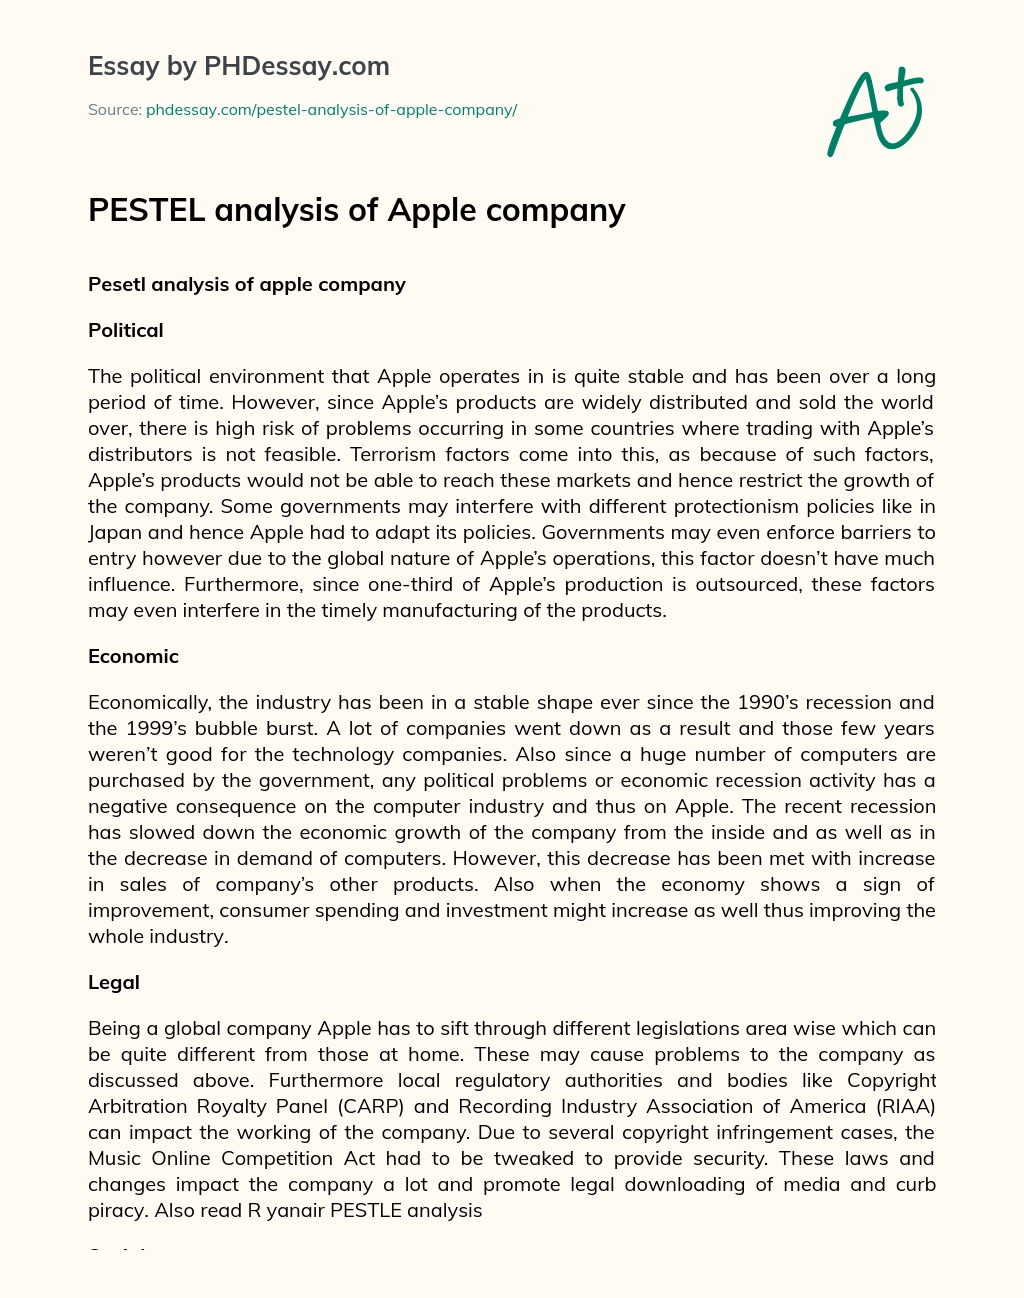 PESTEL analysis of Apple company essay